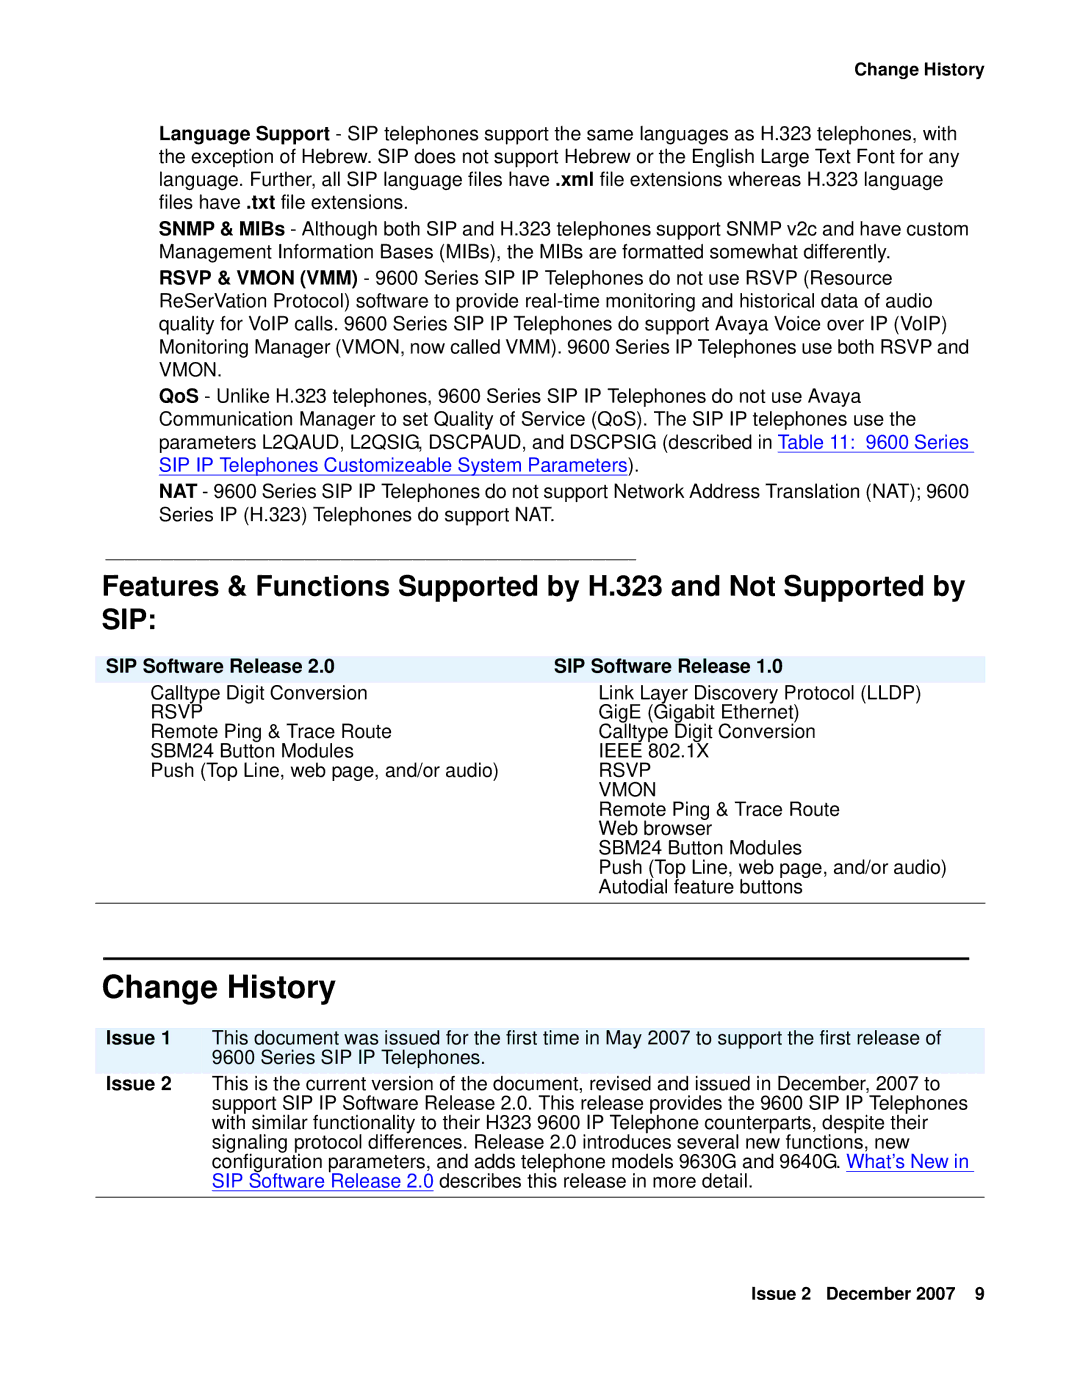 Avaya 9600 manual Change History, SIP Software Release, Rsvp, Vmon 